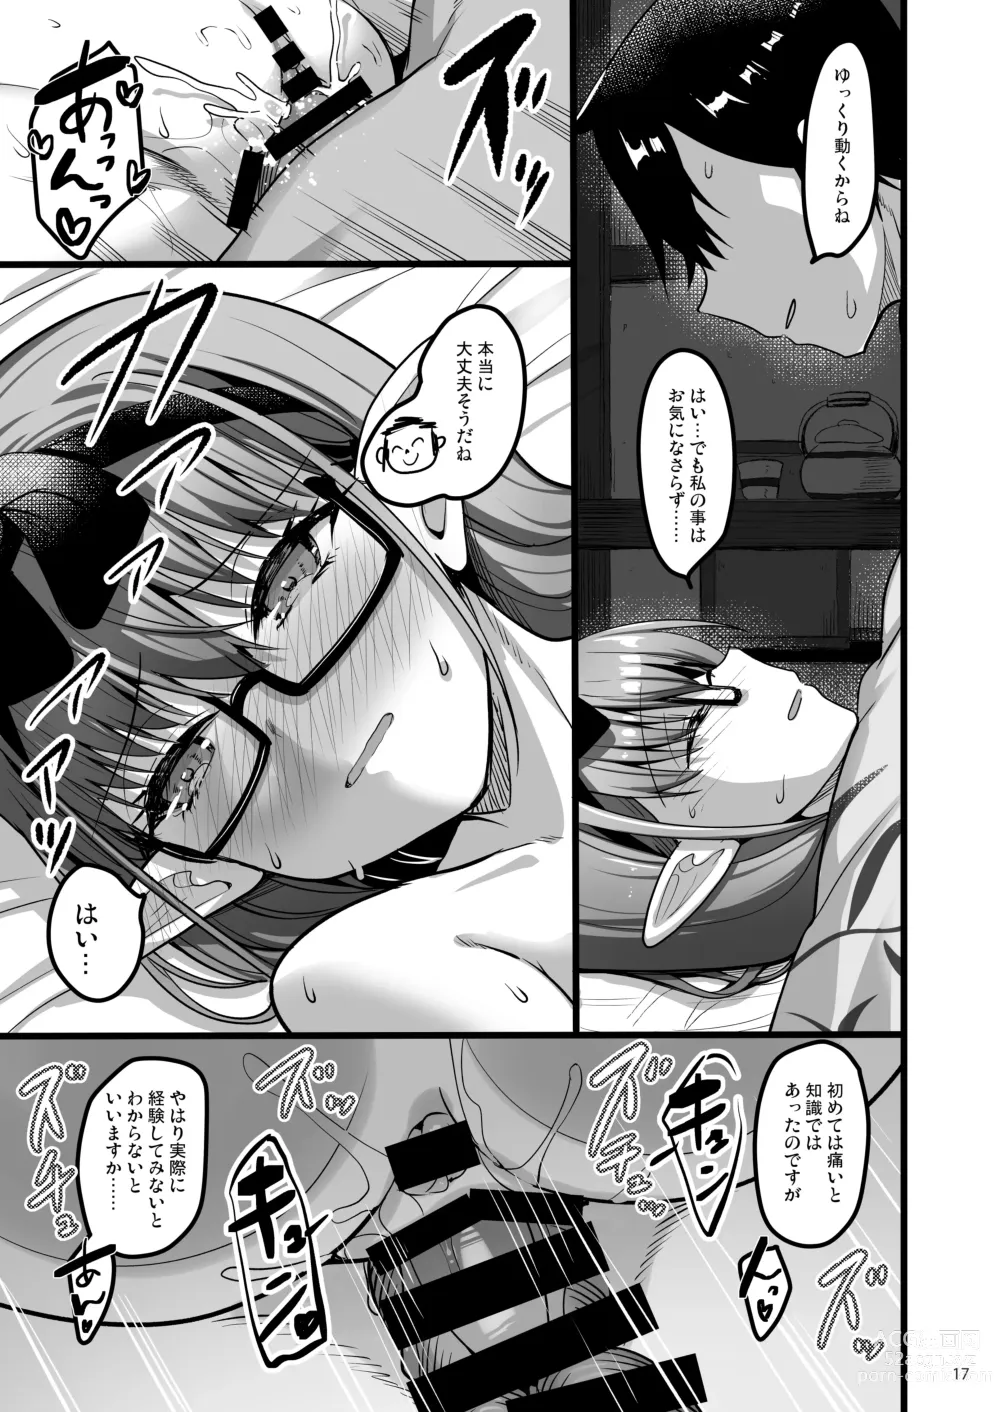 Page 16 of doujinshi Kyou wa Mata, Couple desushi...... - And today were a couple again.